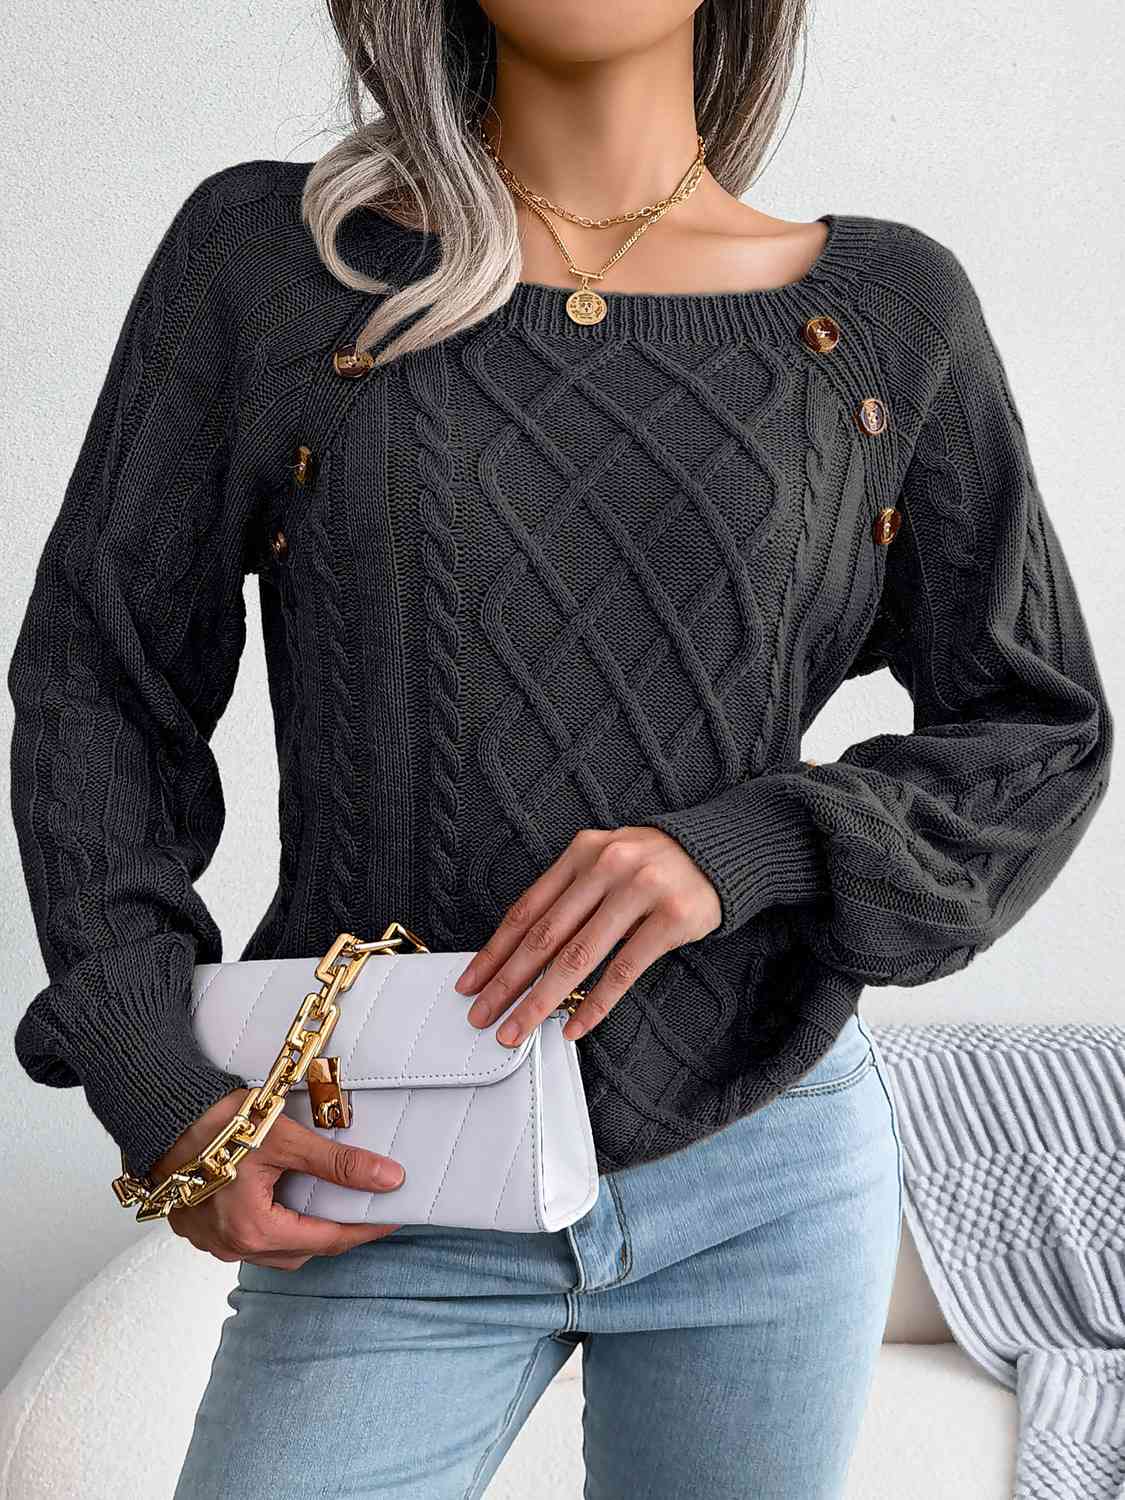 Decorative Button Cable-Knit Sweater (5 Colors) Shirts & Tops Krazy Heart Designs Boutique Black S 